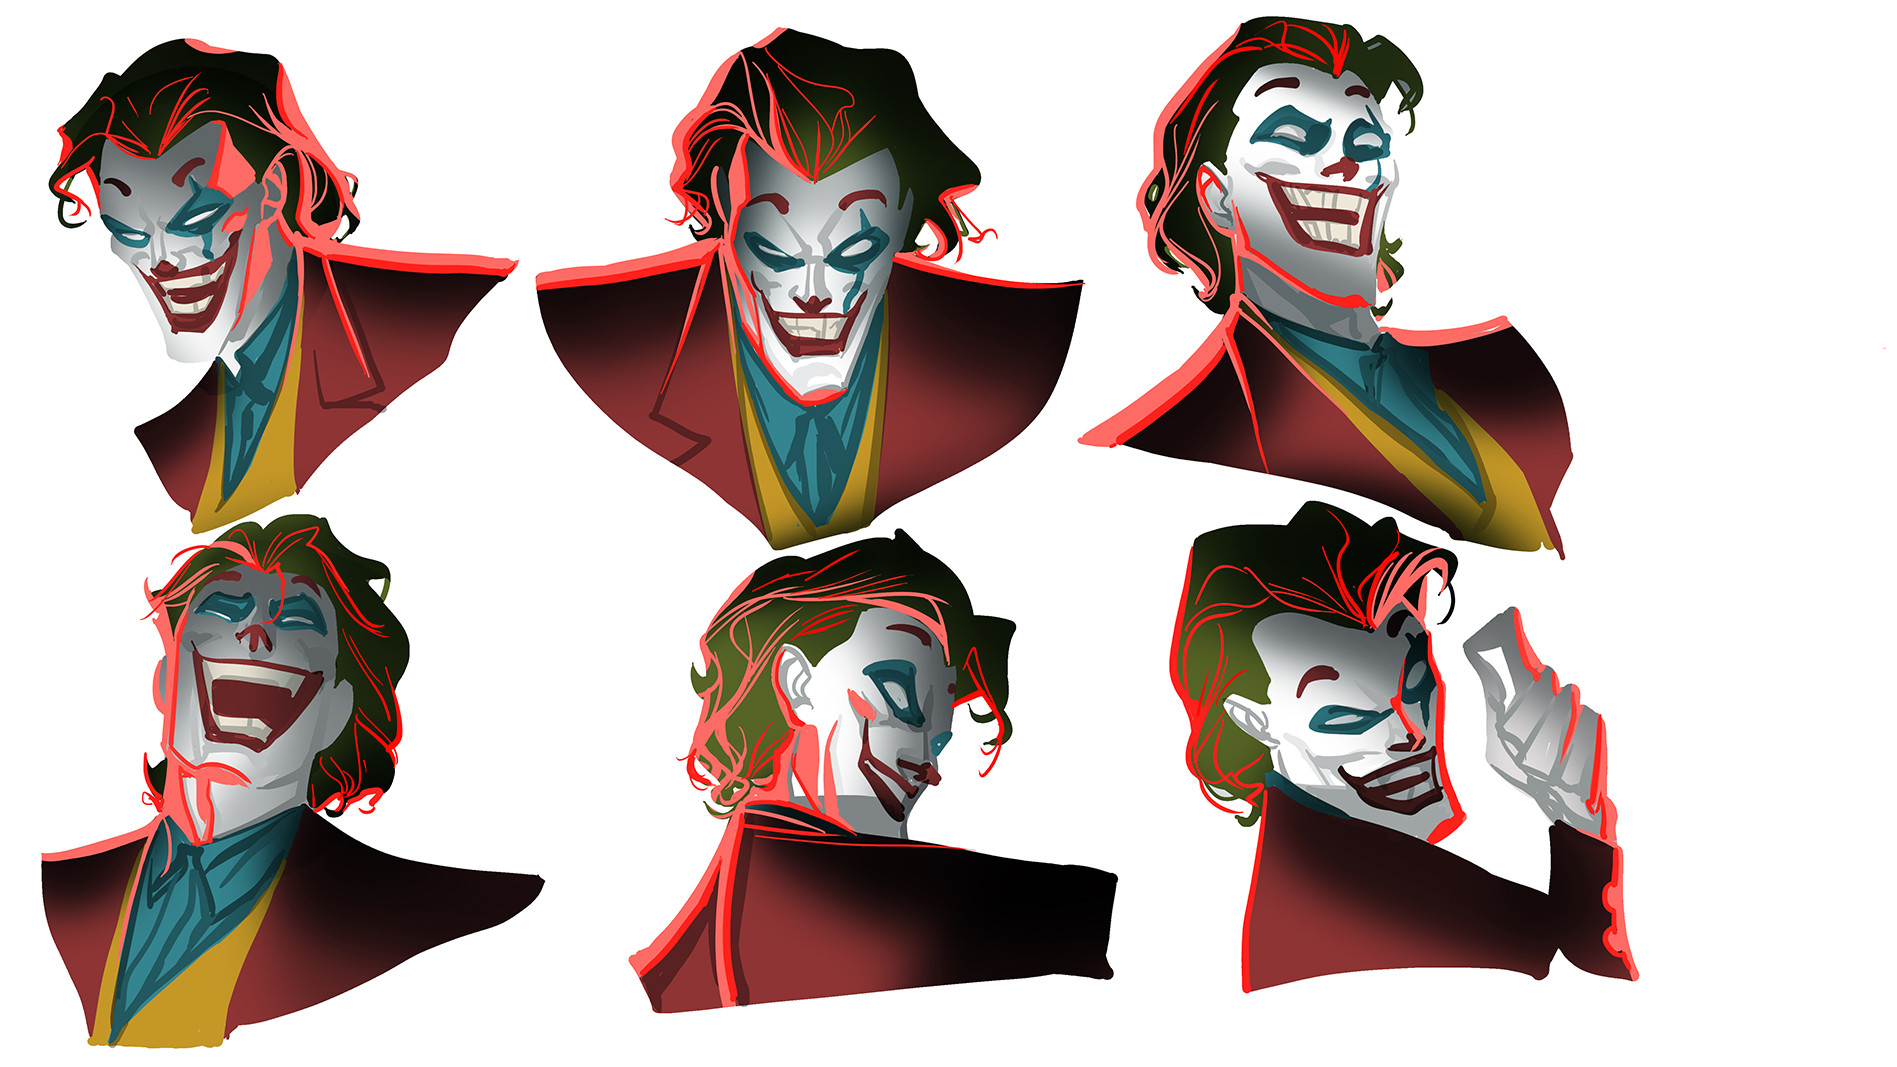 ArtStation - New Joker - Animated Character Study